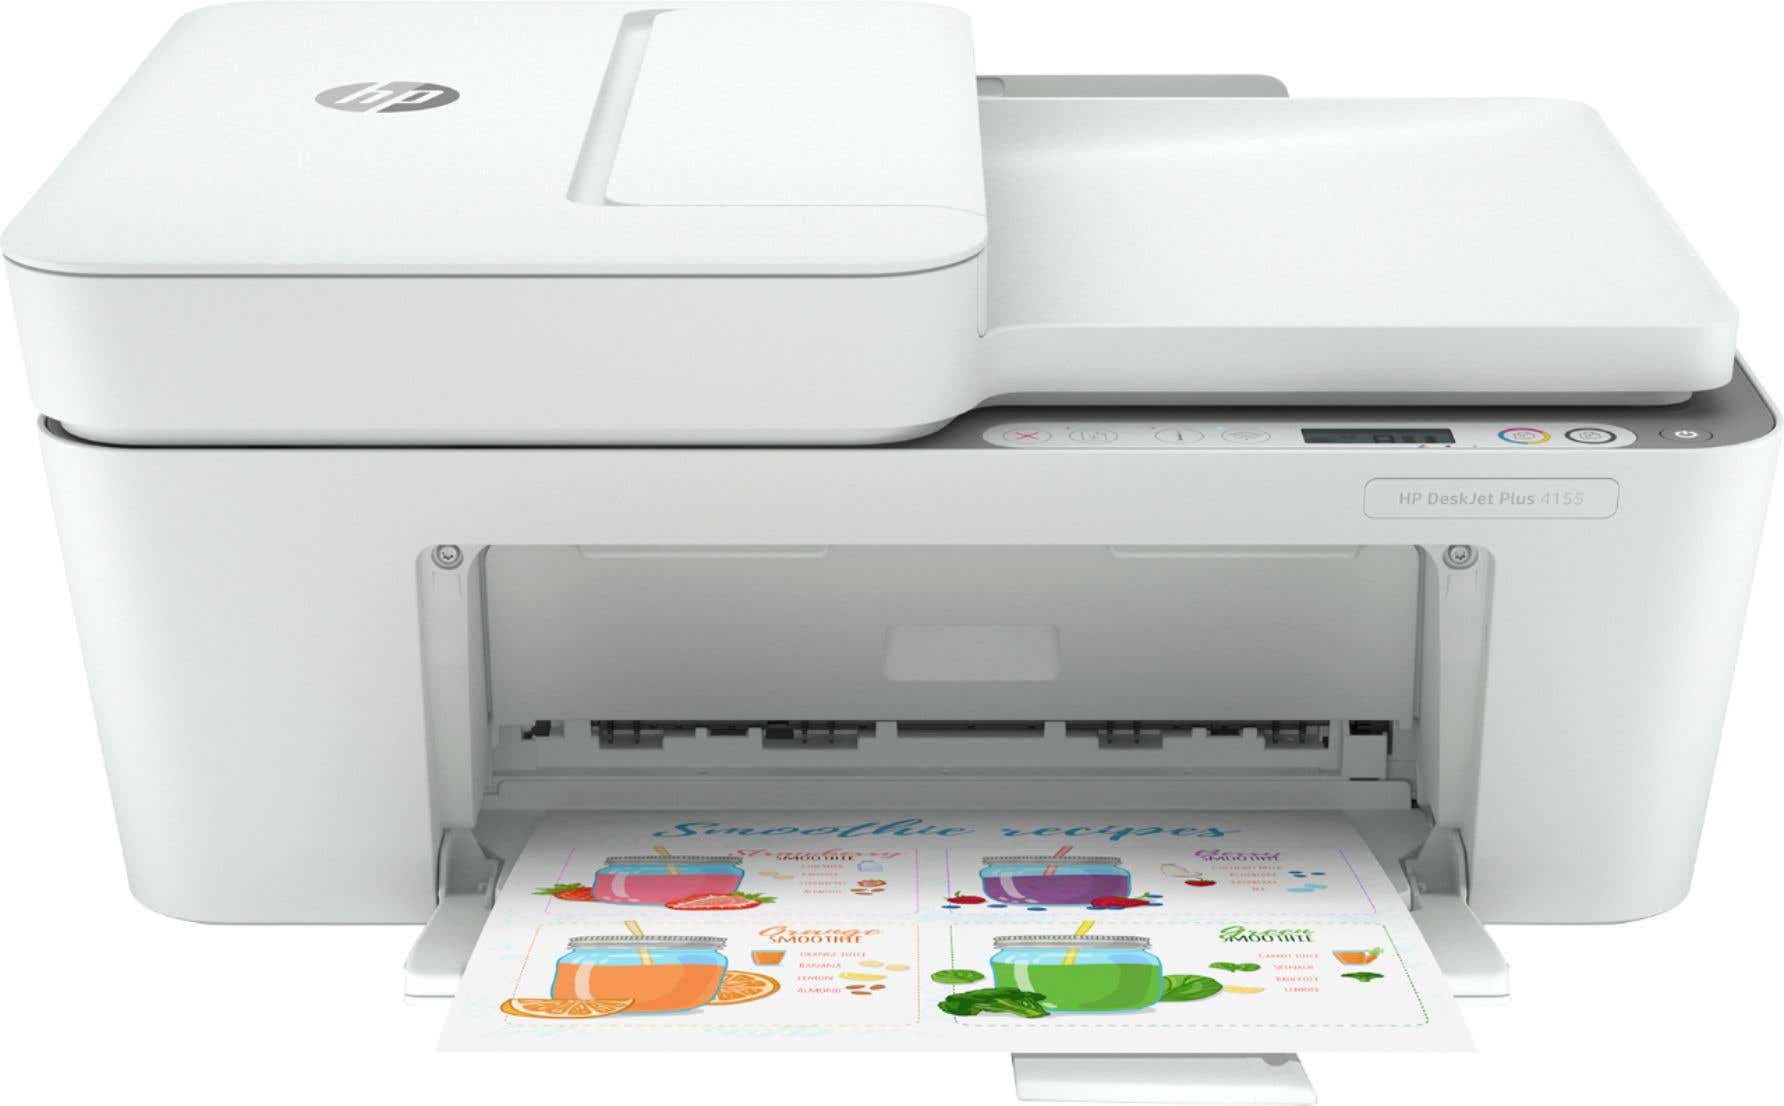 HP DeskJet Plus 4155 Printer Front